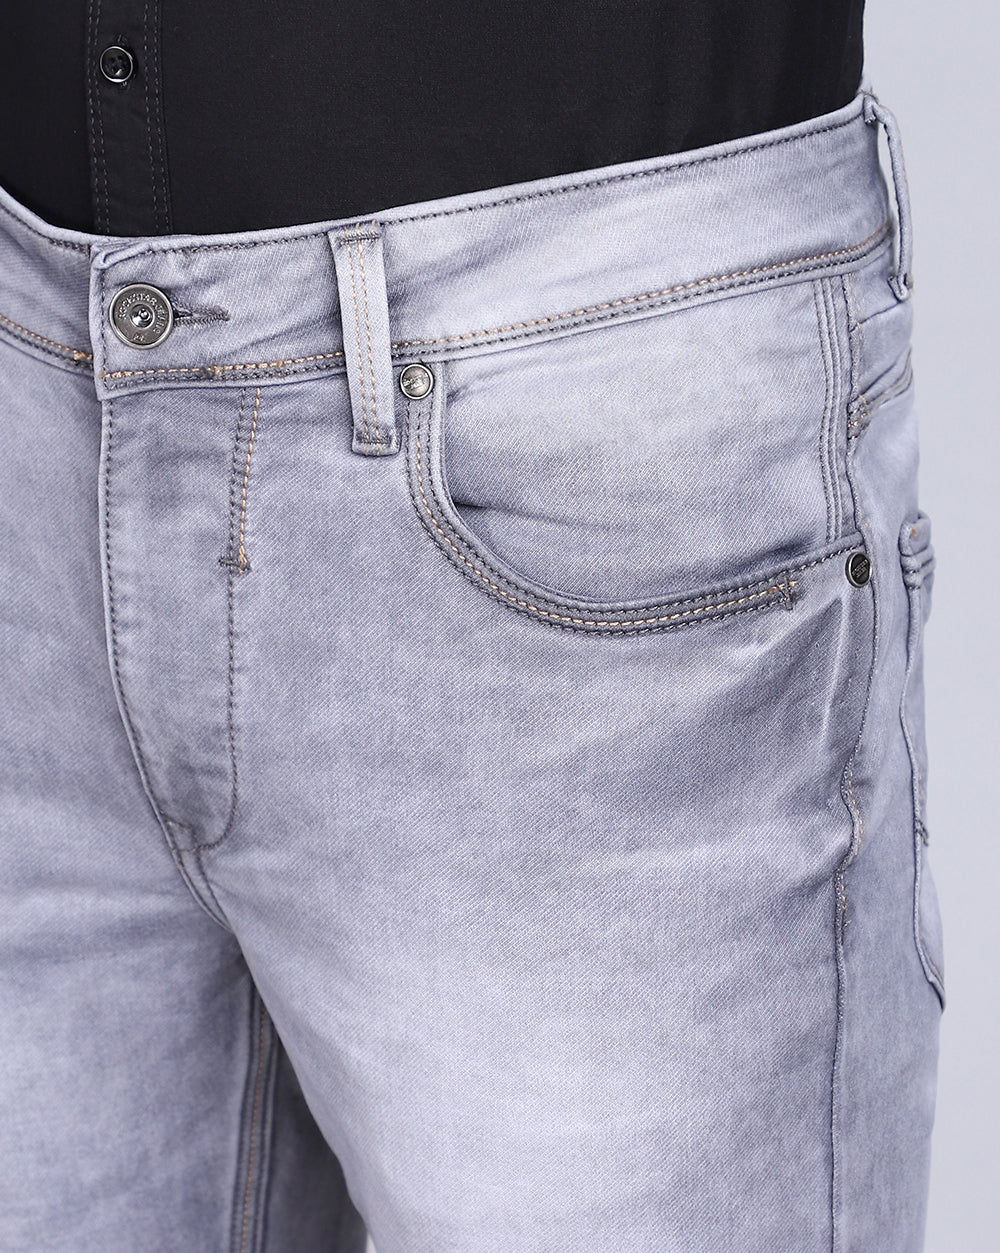 Buy Light Grey Slim Jeans For Men at Great Price – Rockstar Jeans